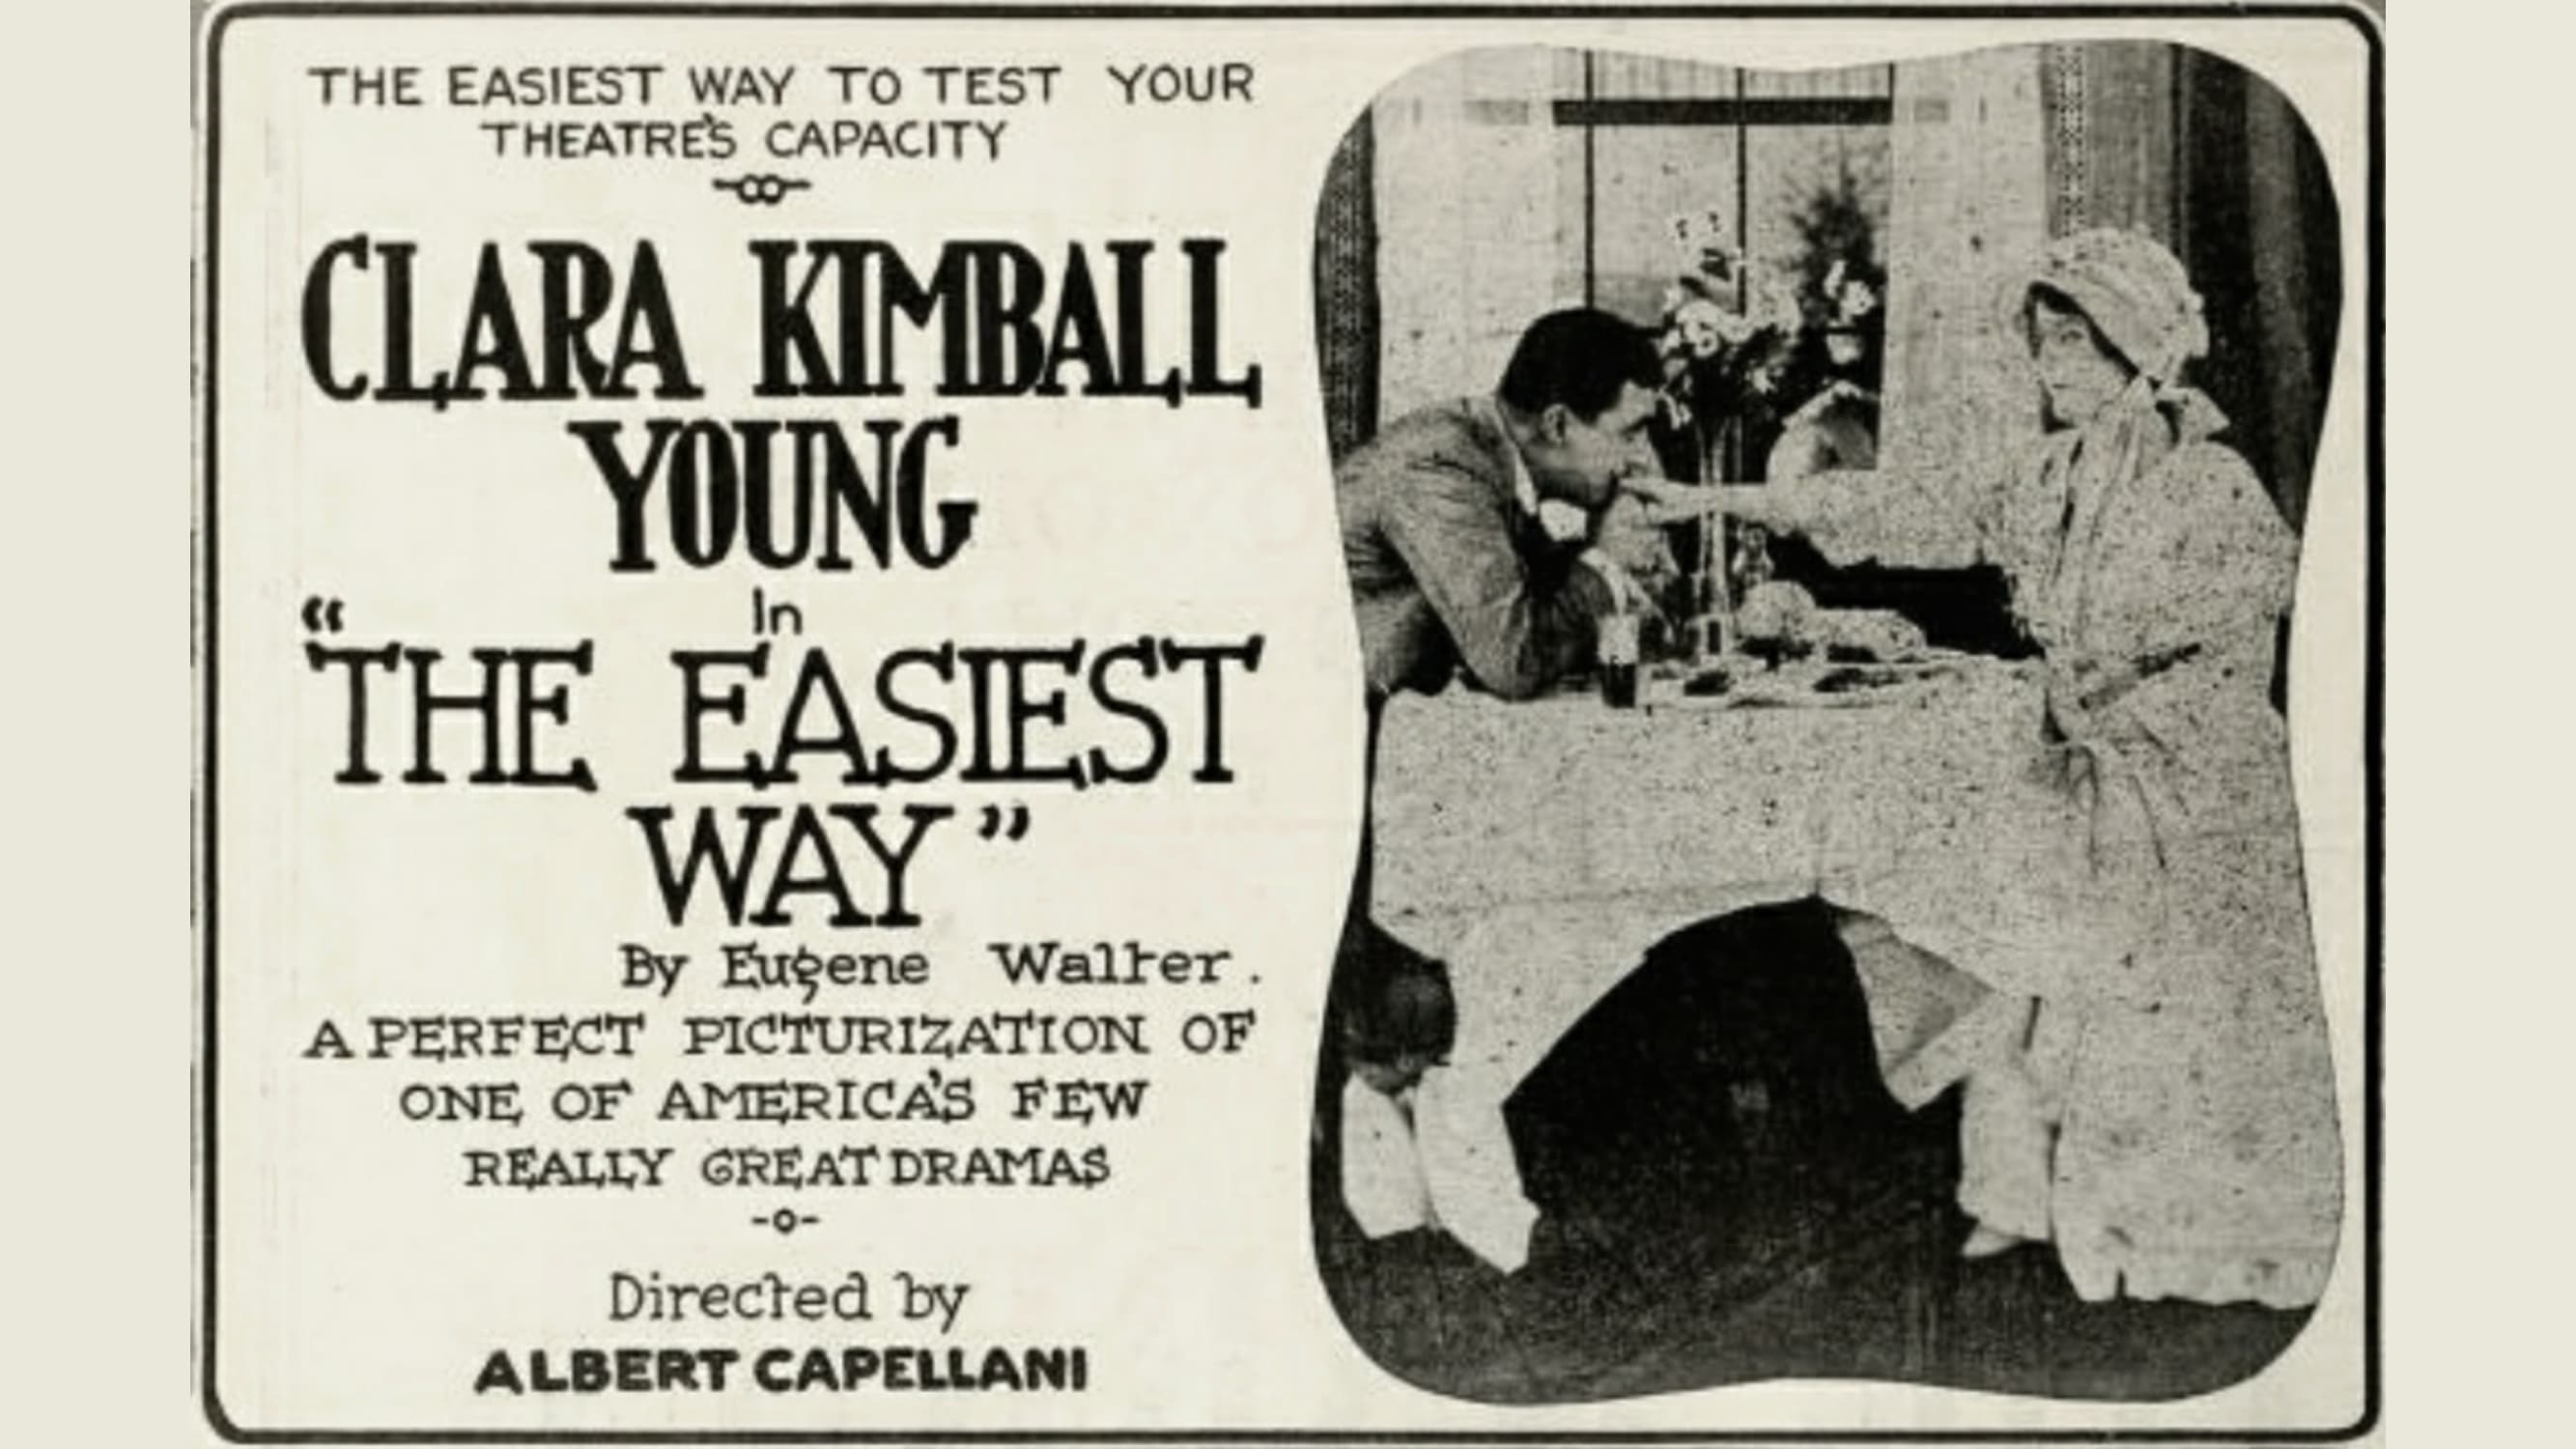 The Easiest Way (1917)